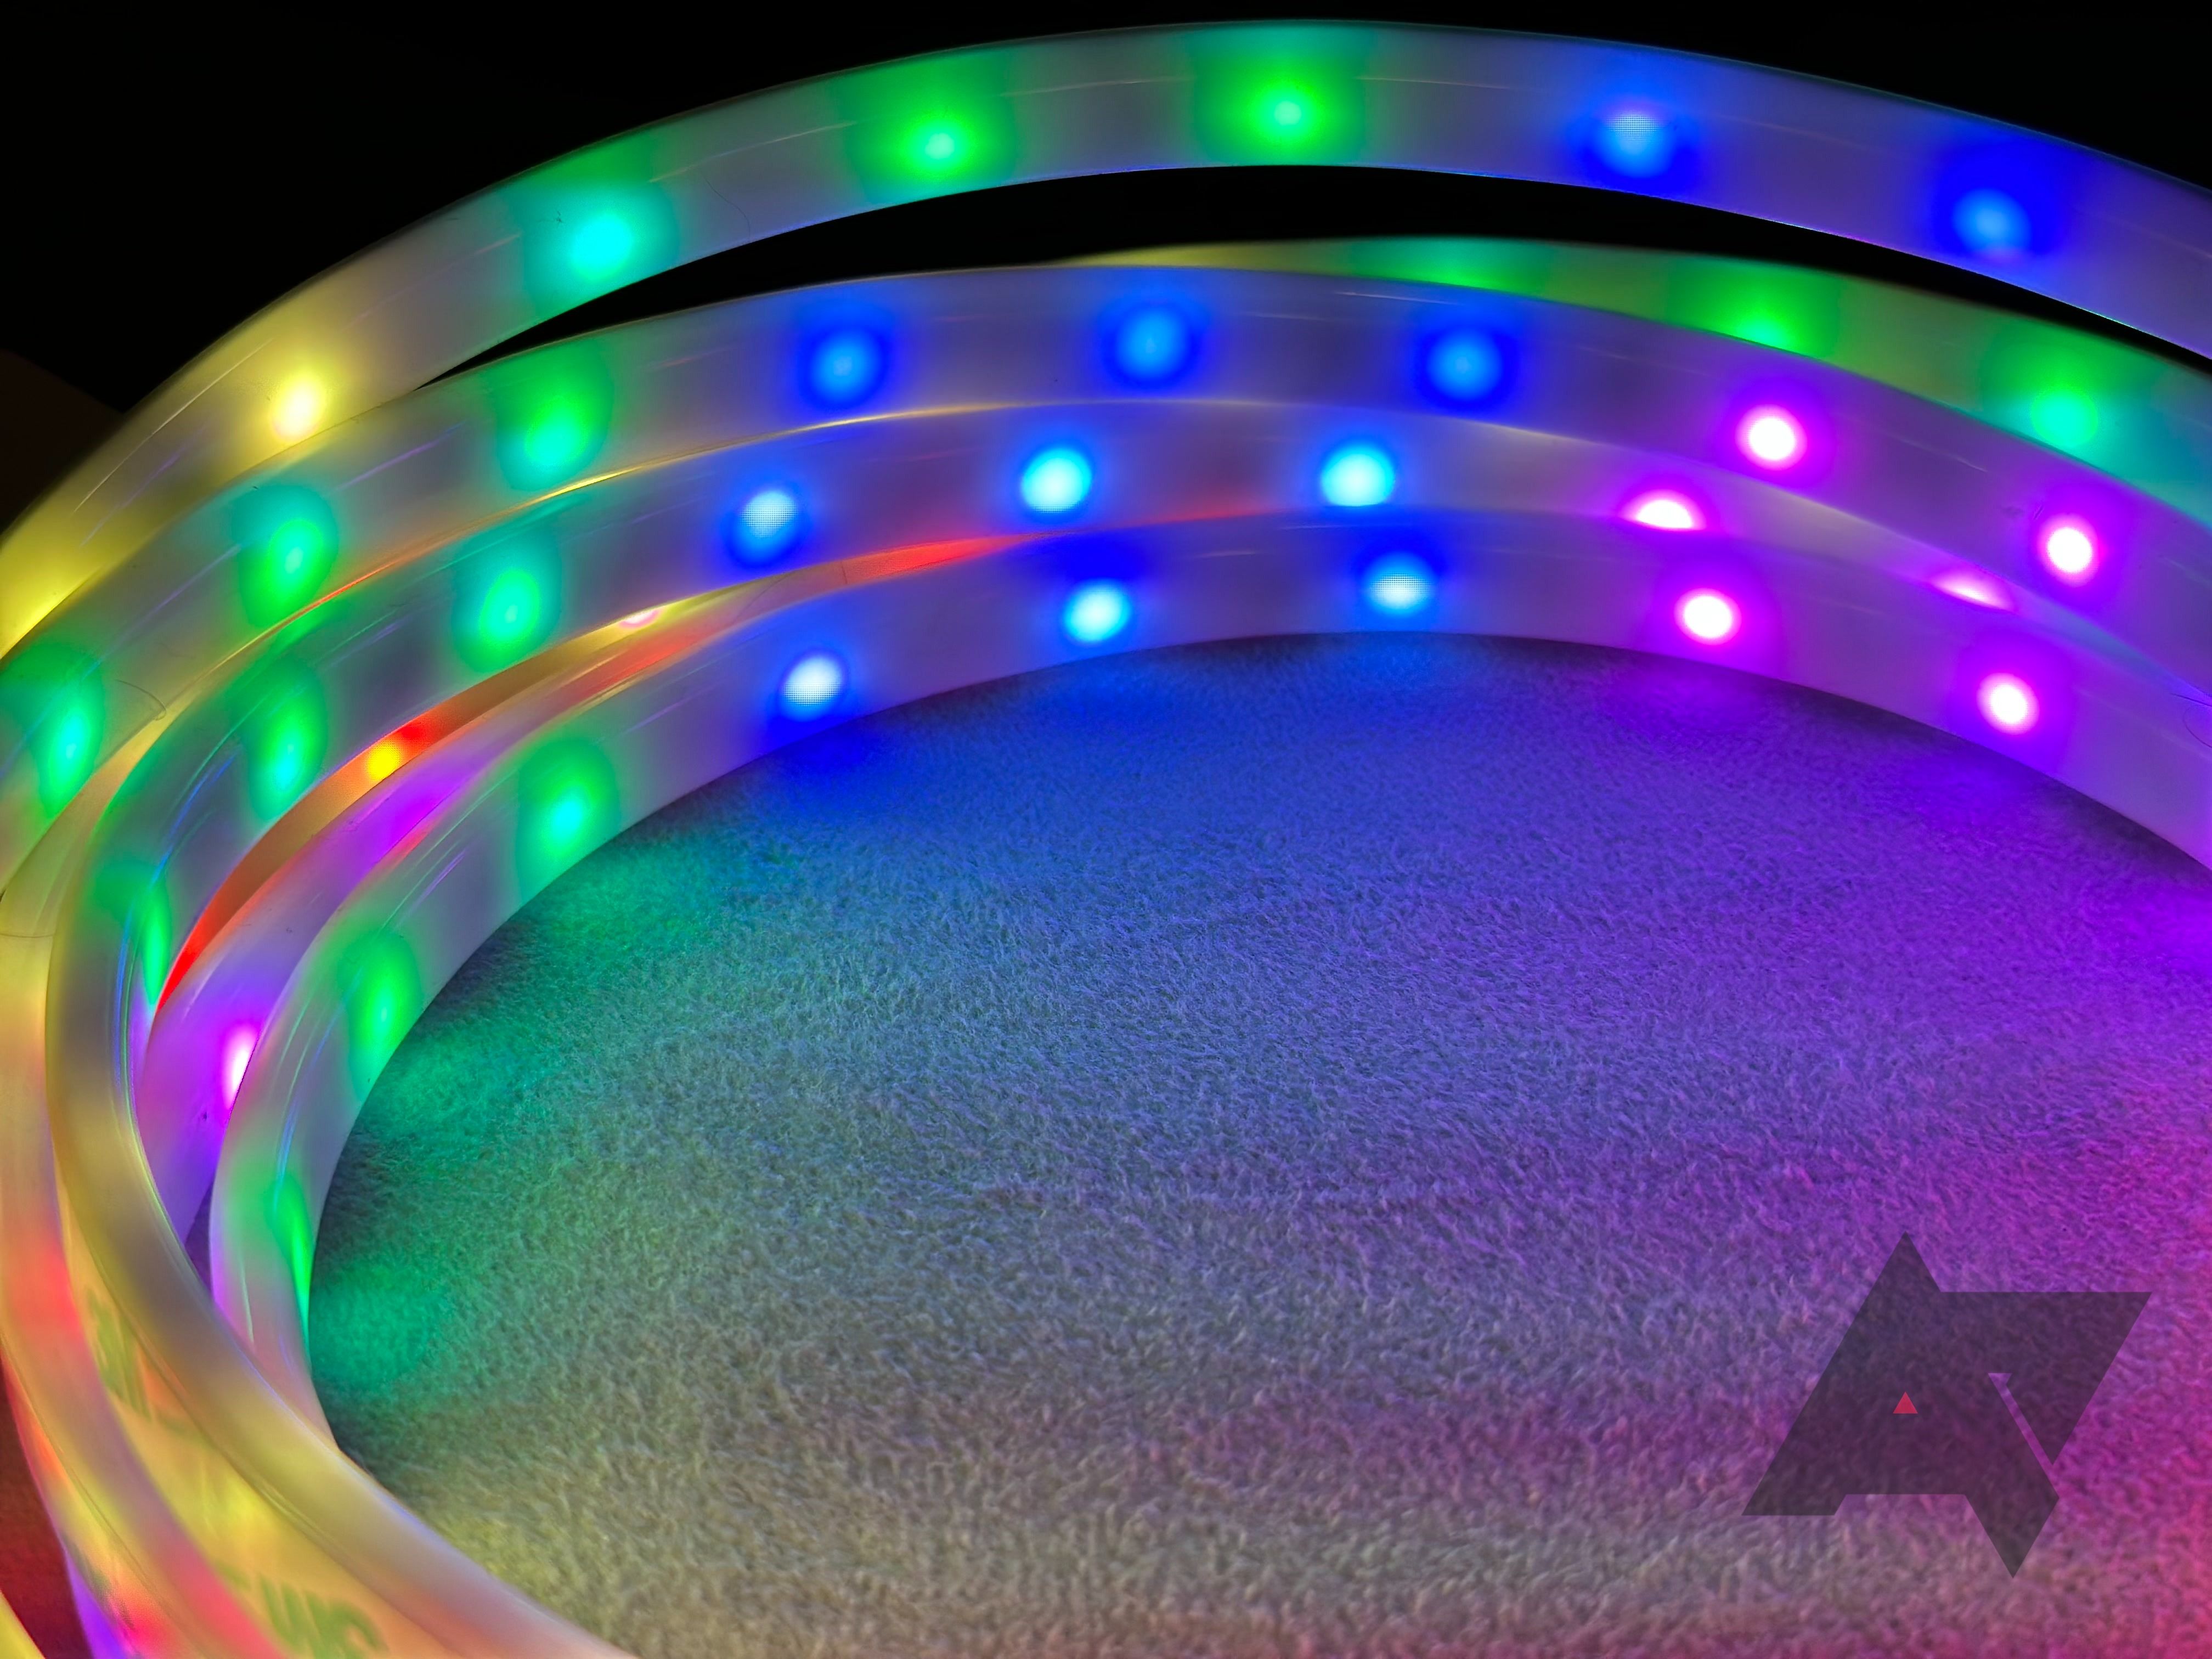 Faixa de luz inteligente Cync Full Color Dynamic Effects da GE enrolada, com luzes RGB acesas